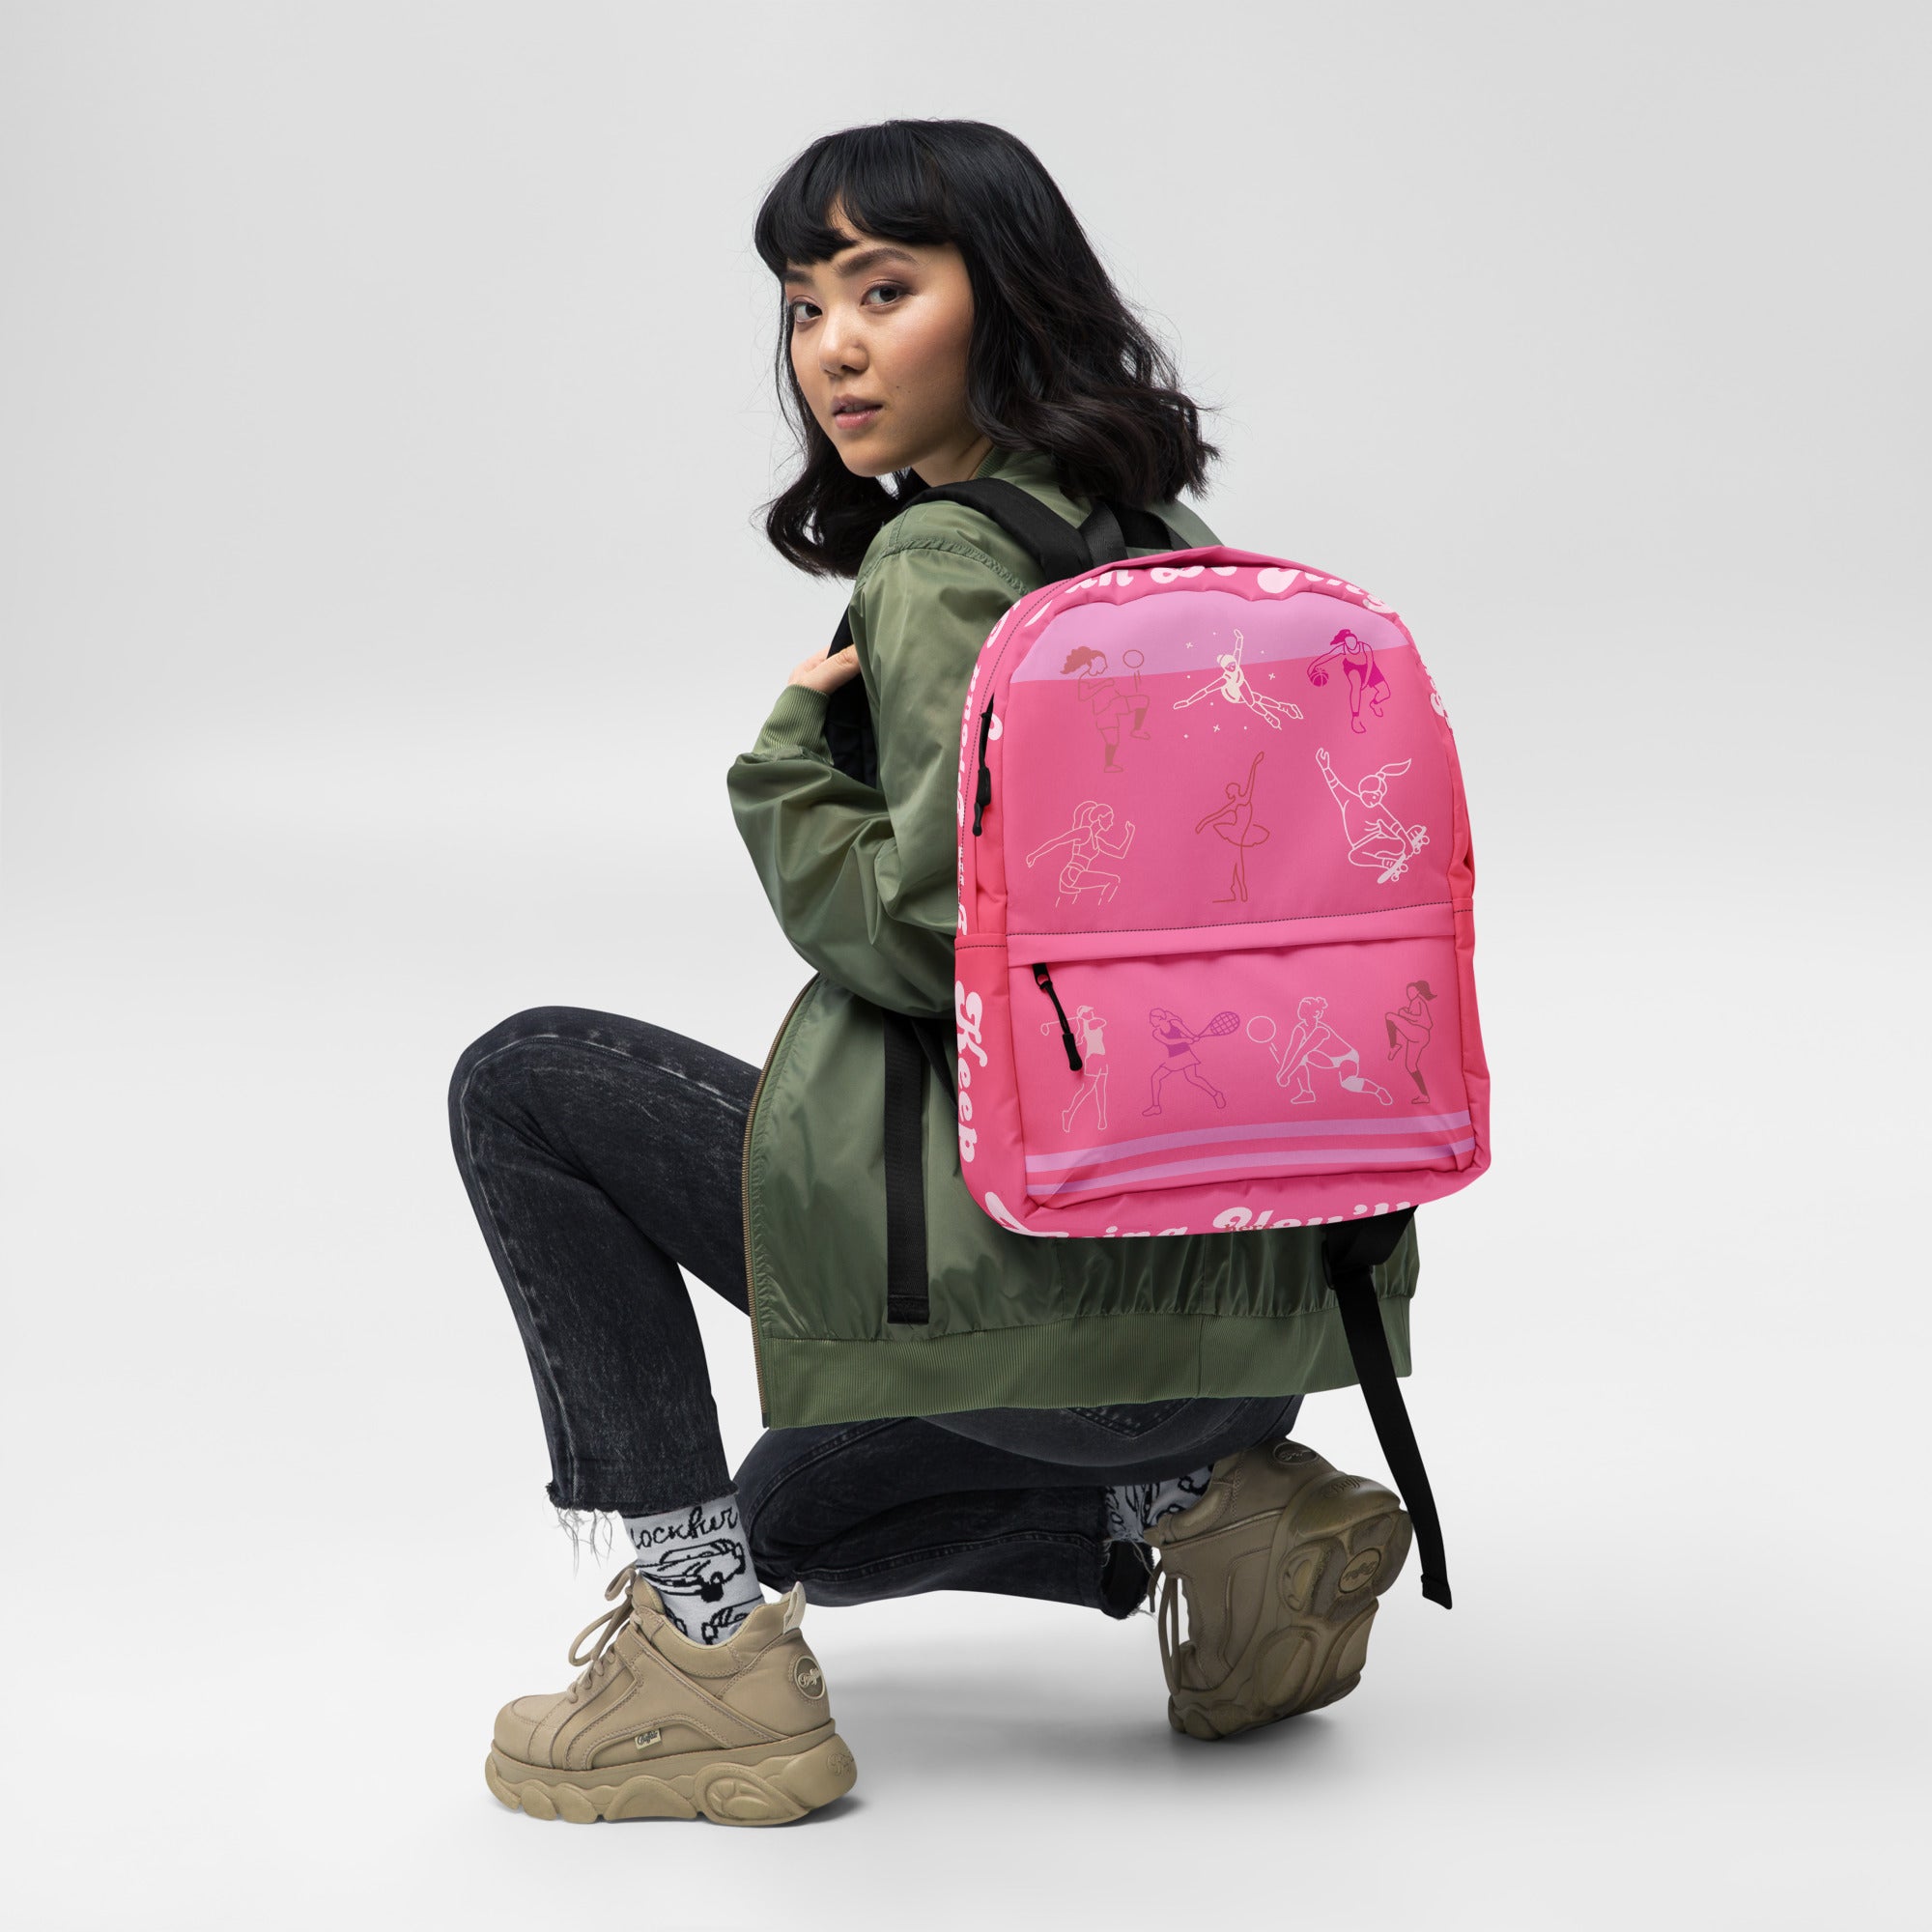 Girlz Powerz Backpack